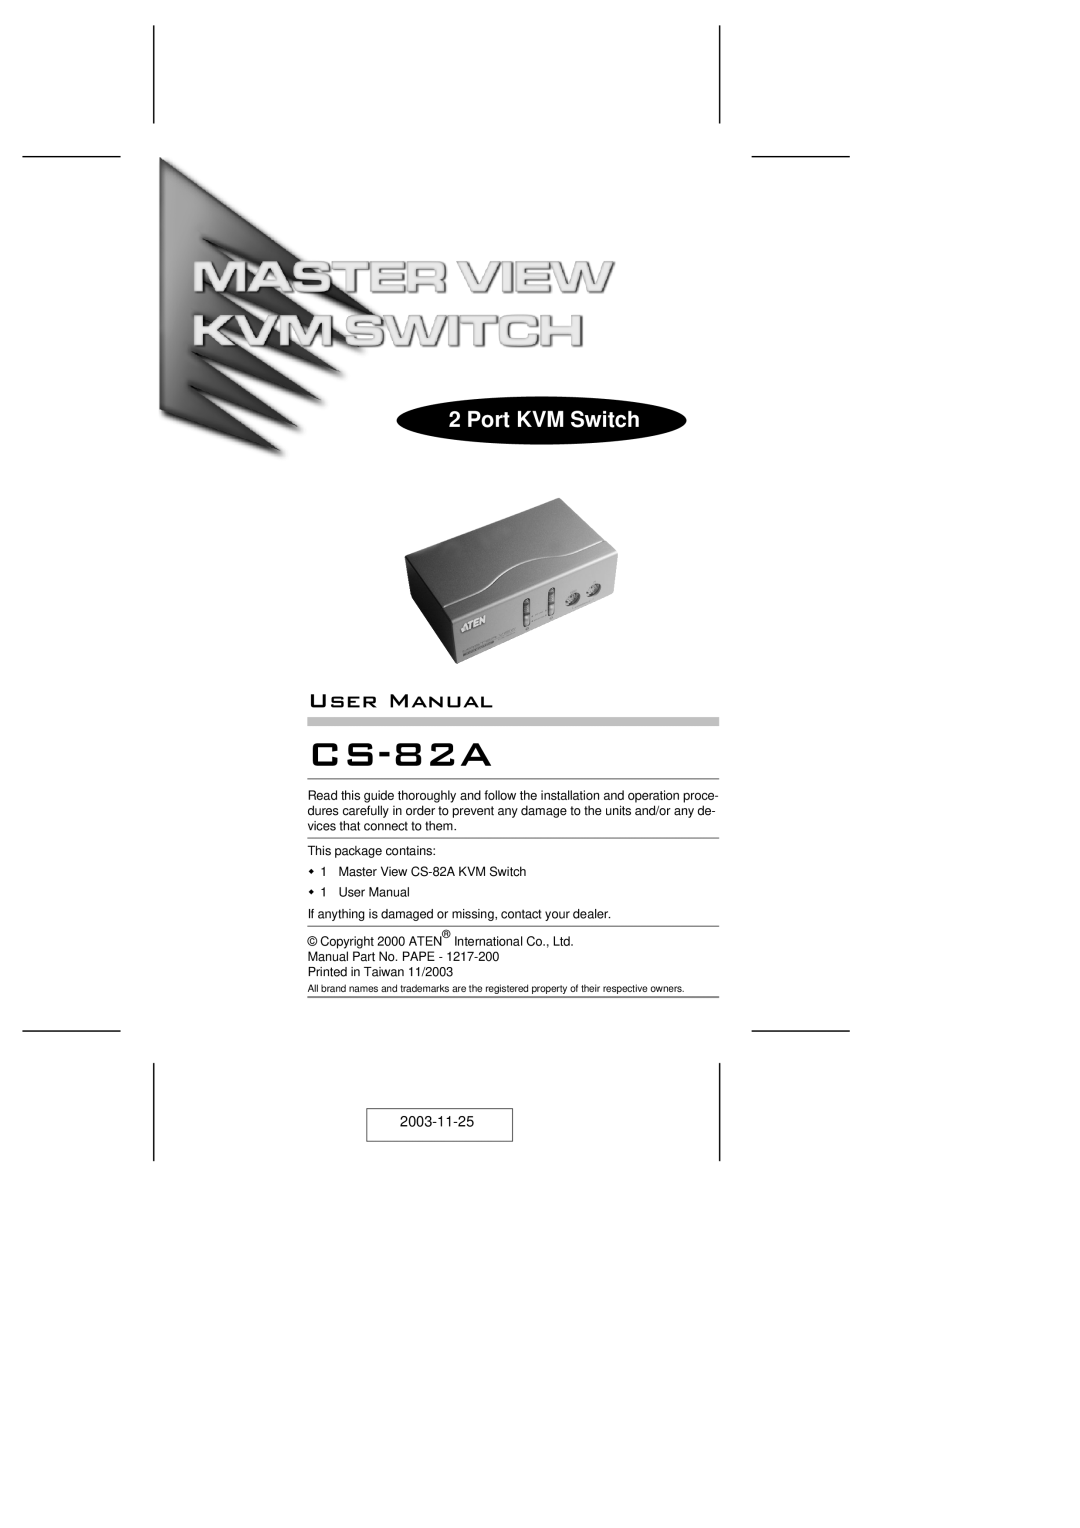 ATEN Technology CS-82A user manual User Manual, Port KVM Switch 